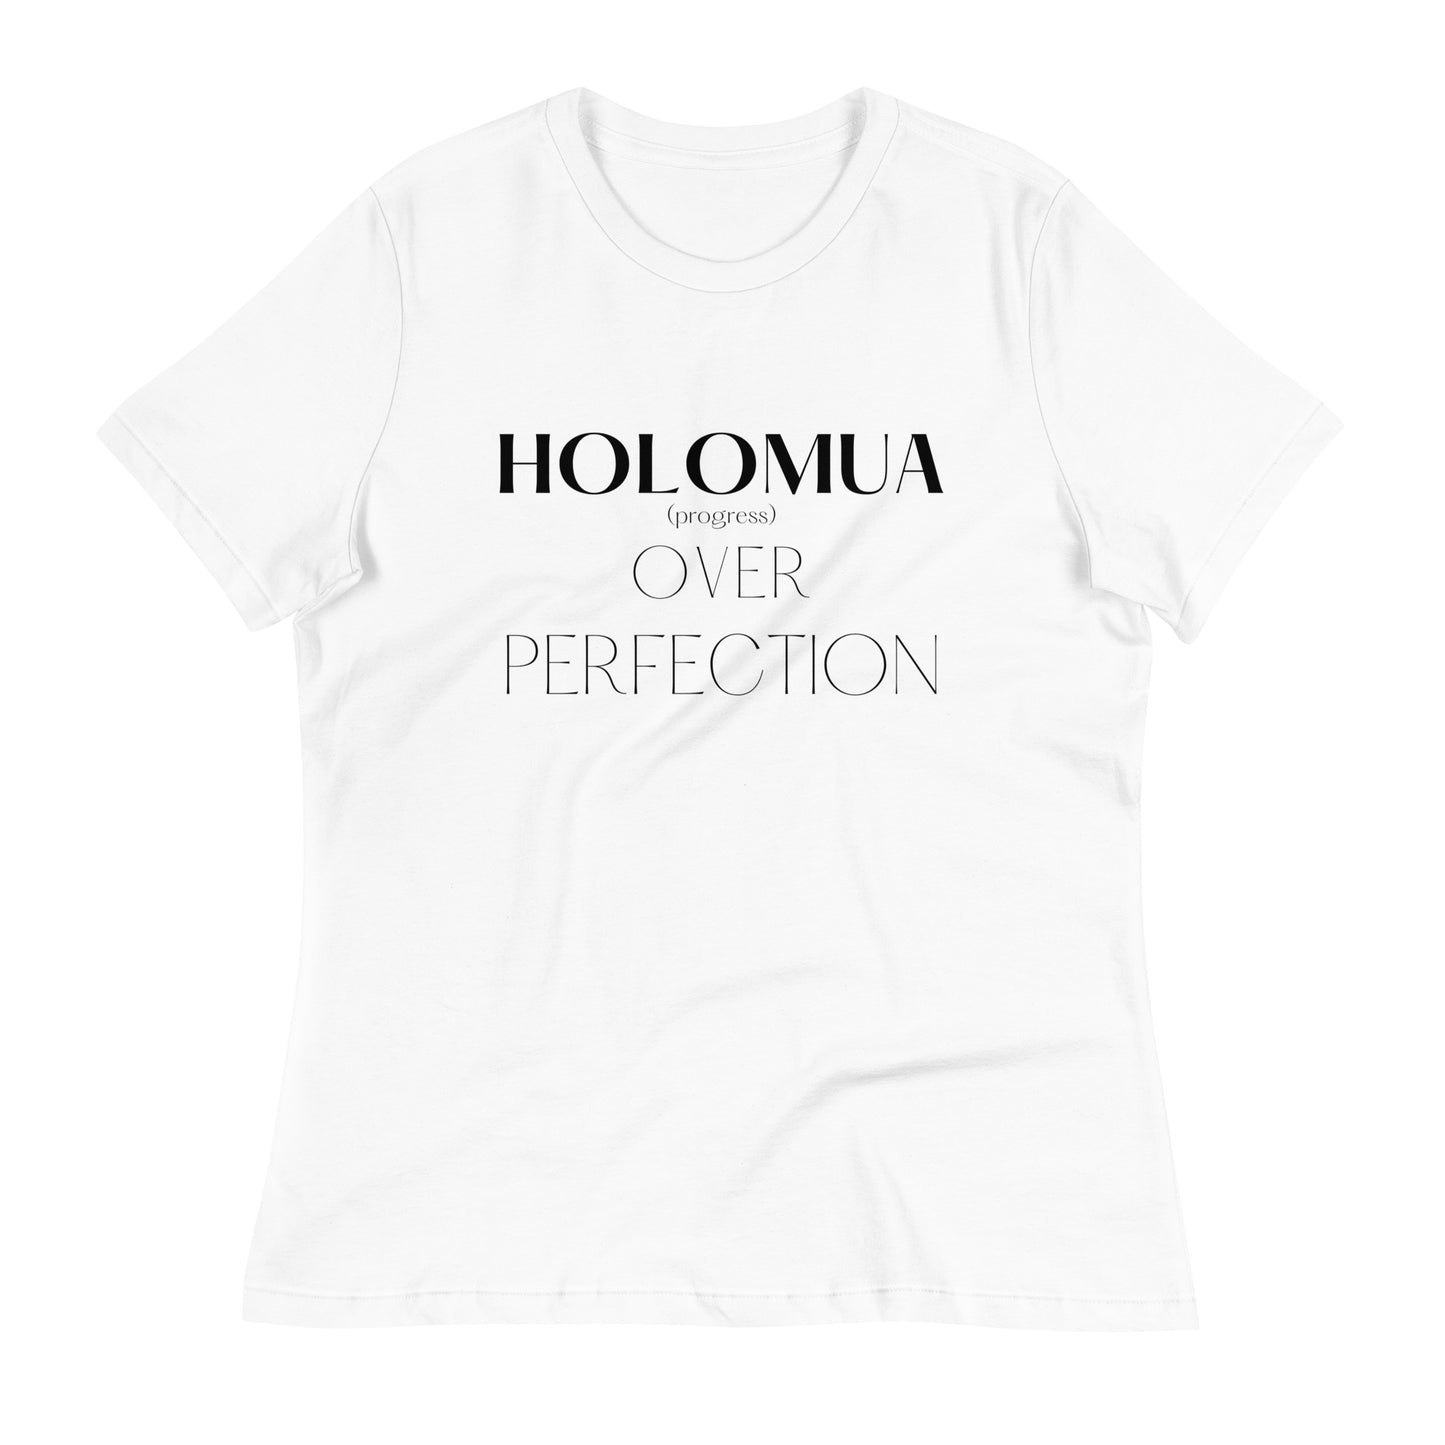 Holomua over perfection short sleeve t-shirt